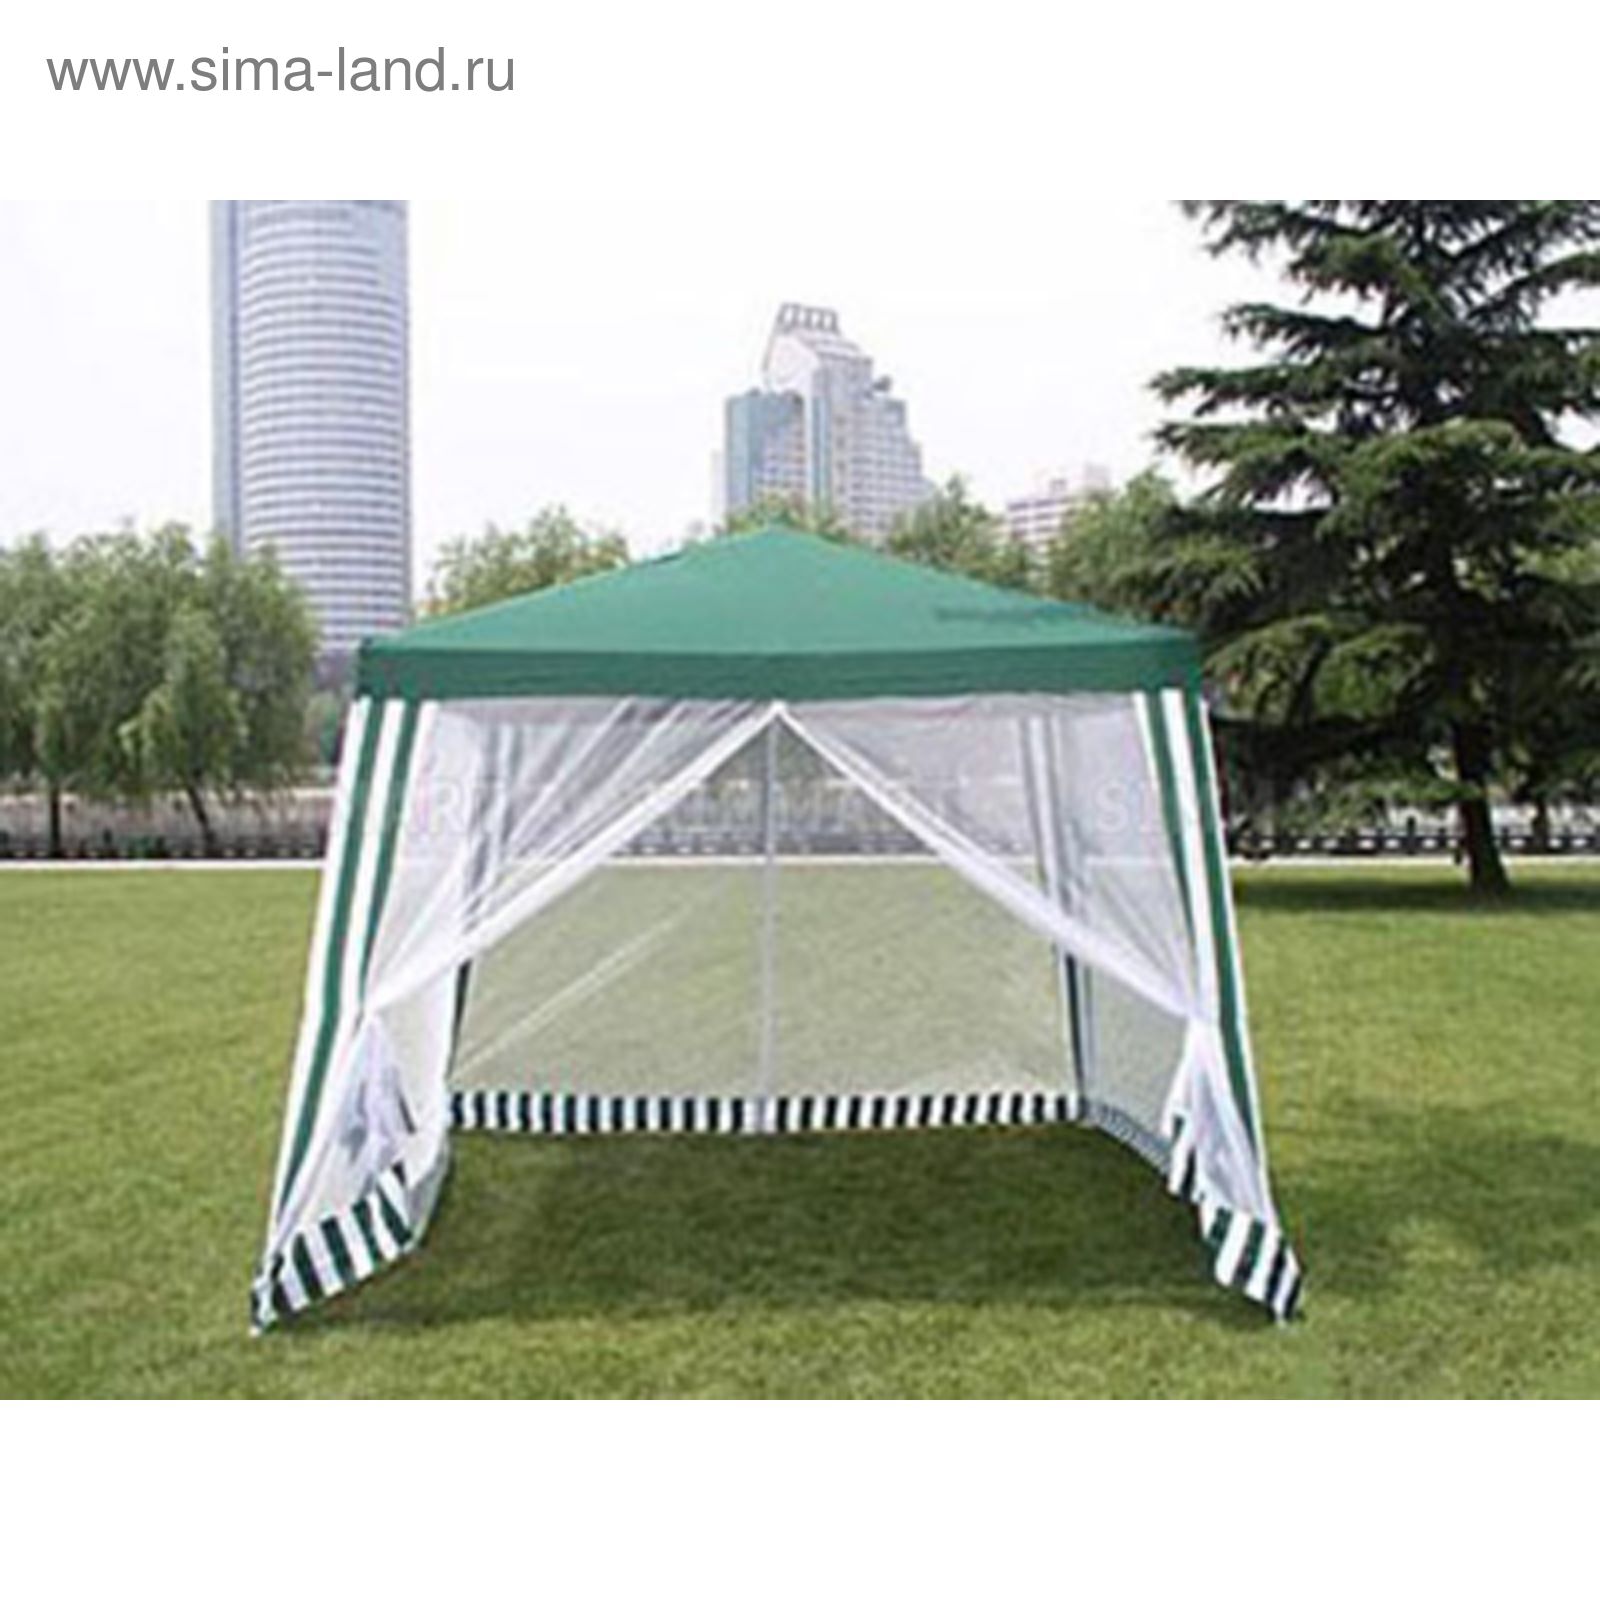 Стенка для шатра с окнами 2х3 м, полиэстер, зелёная